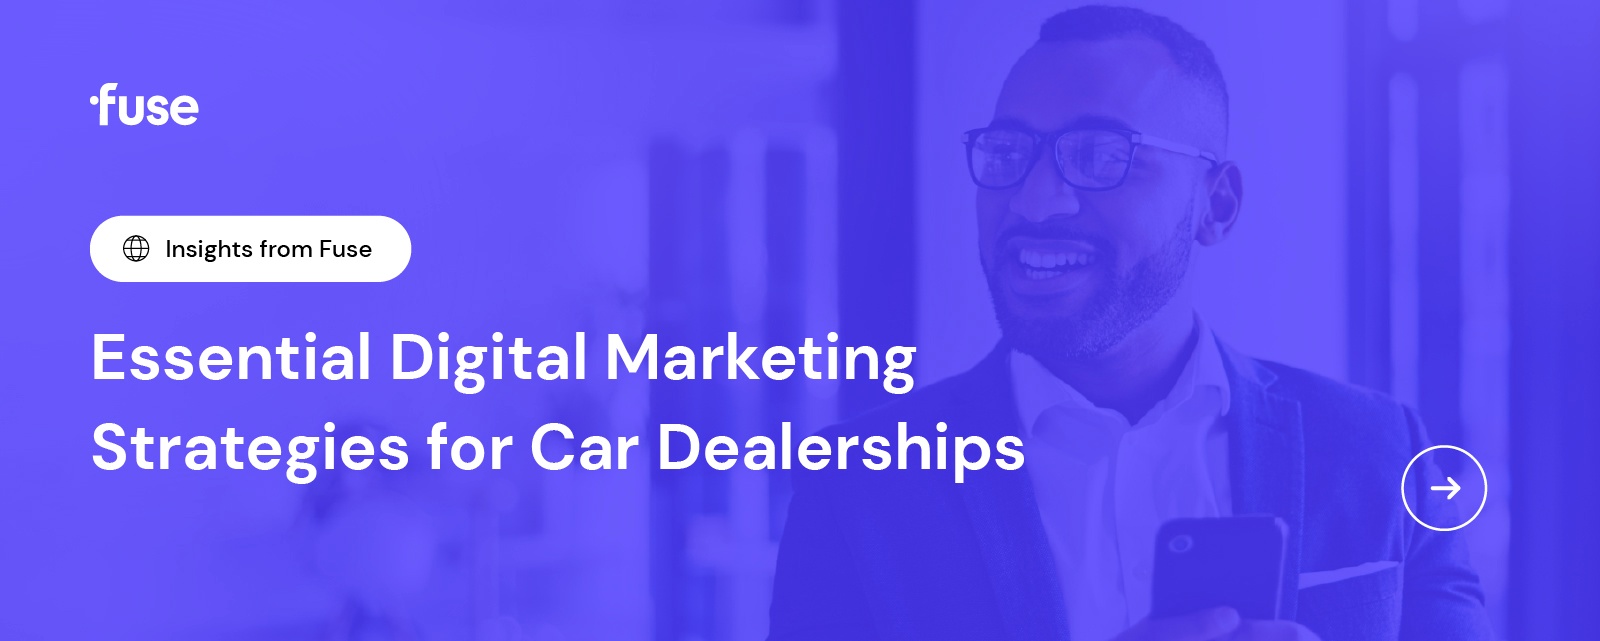 essential digital marketing strategies for car dealerships